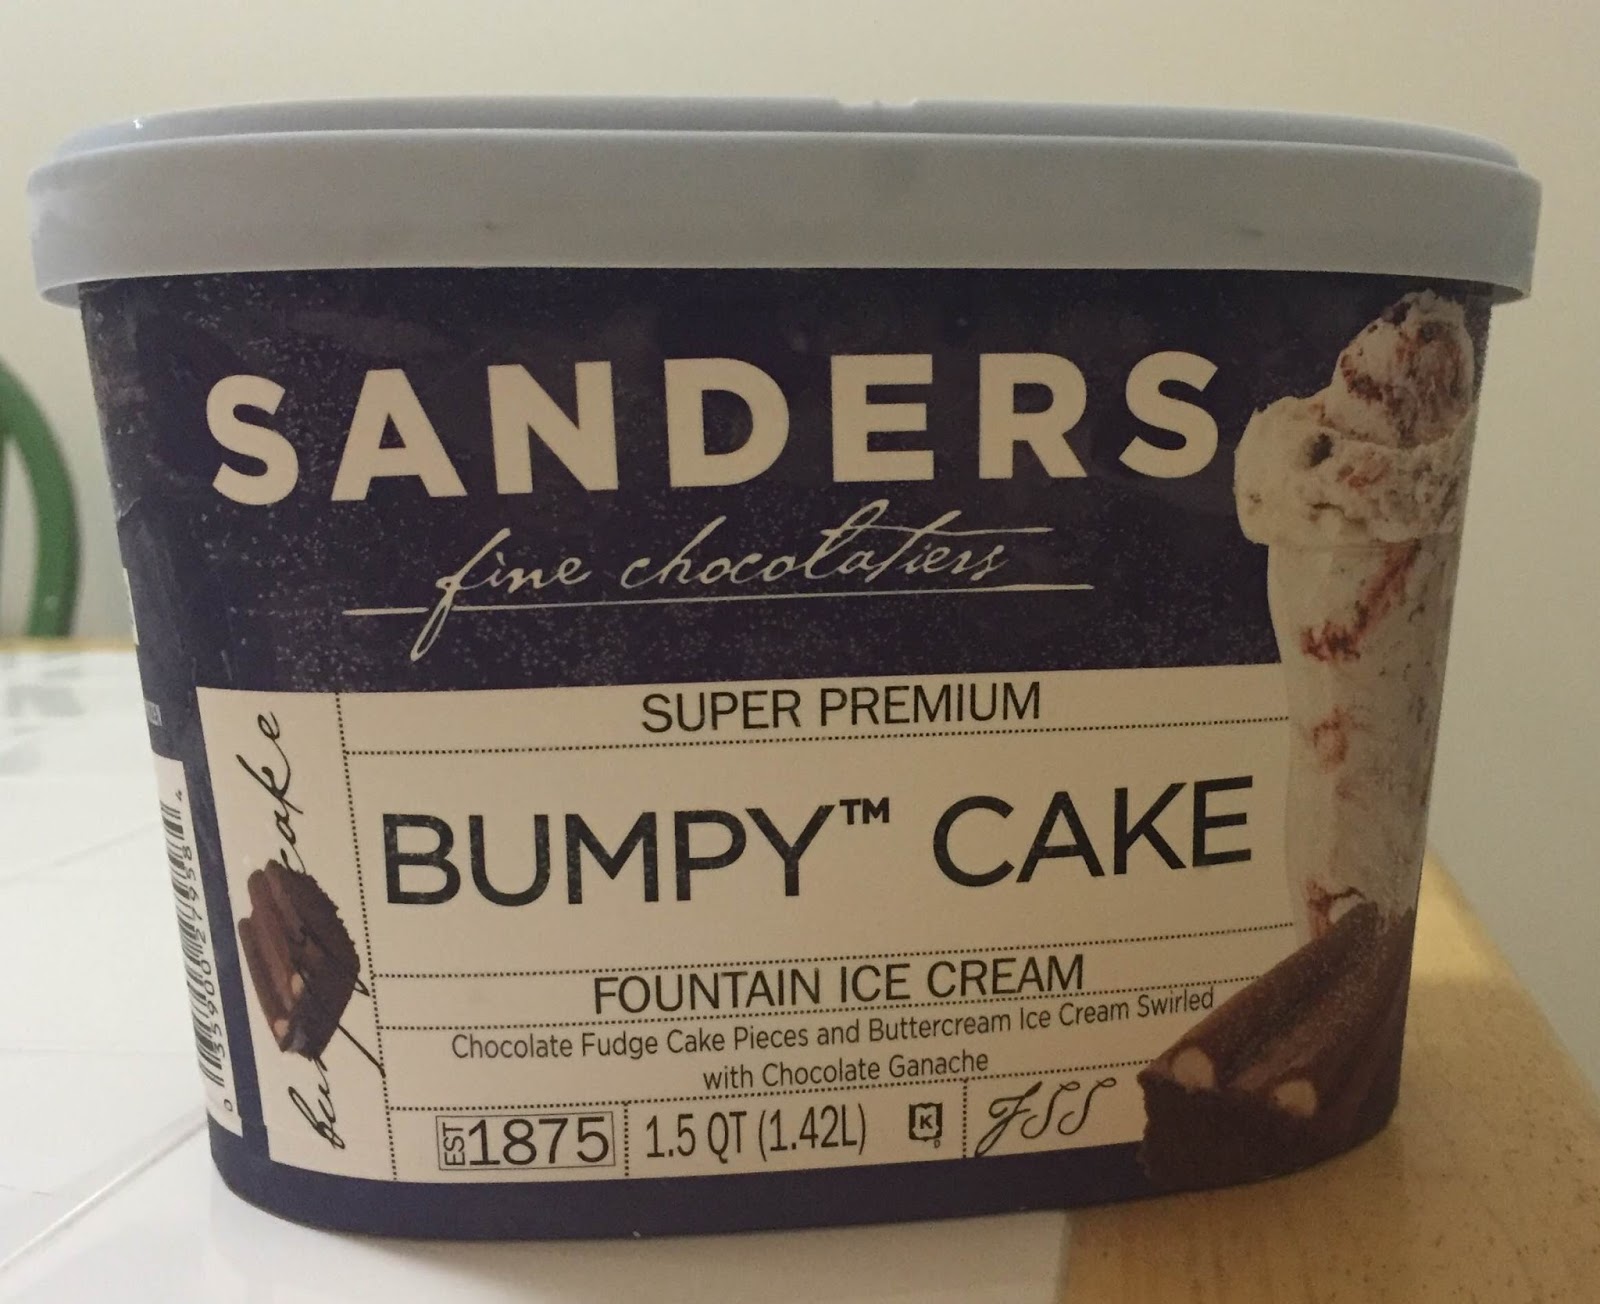 Sanders Fine Chocolatiers Bumpy Cake